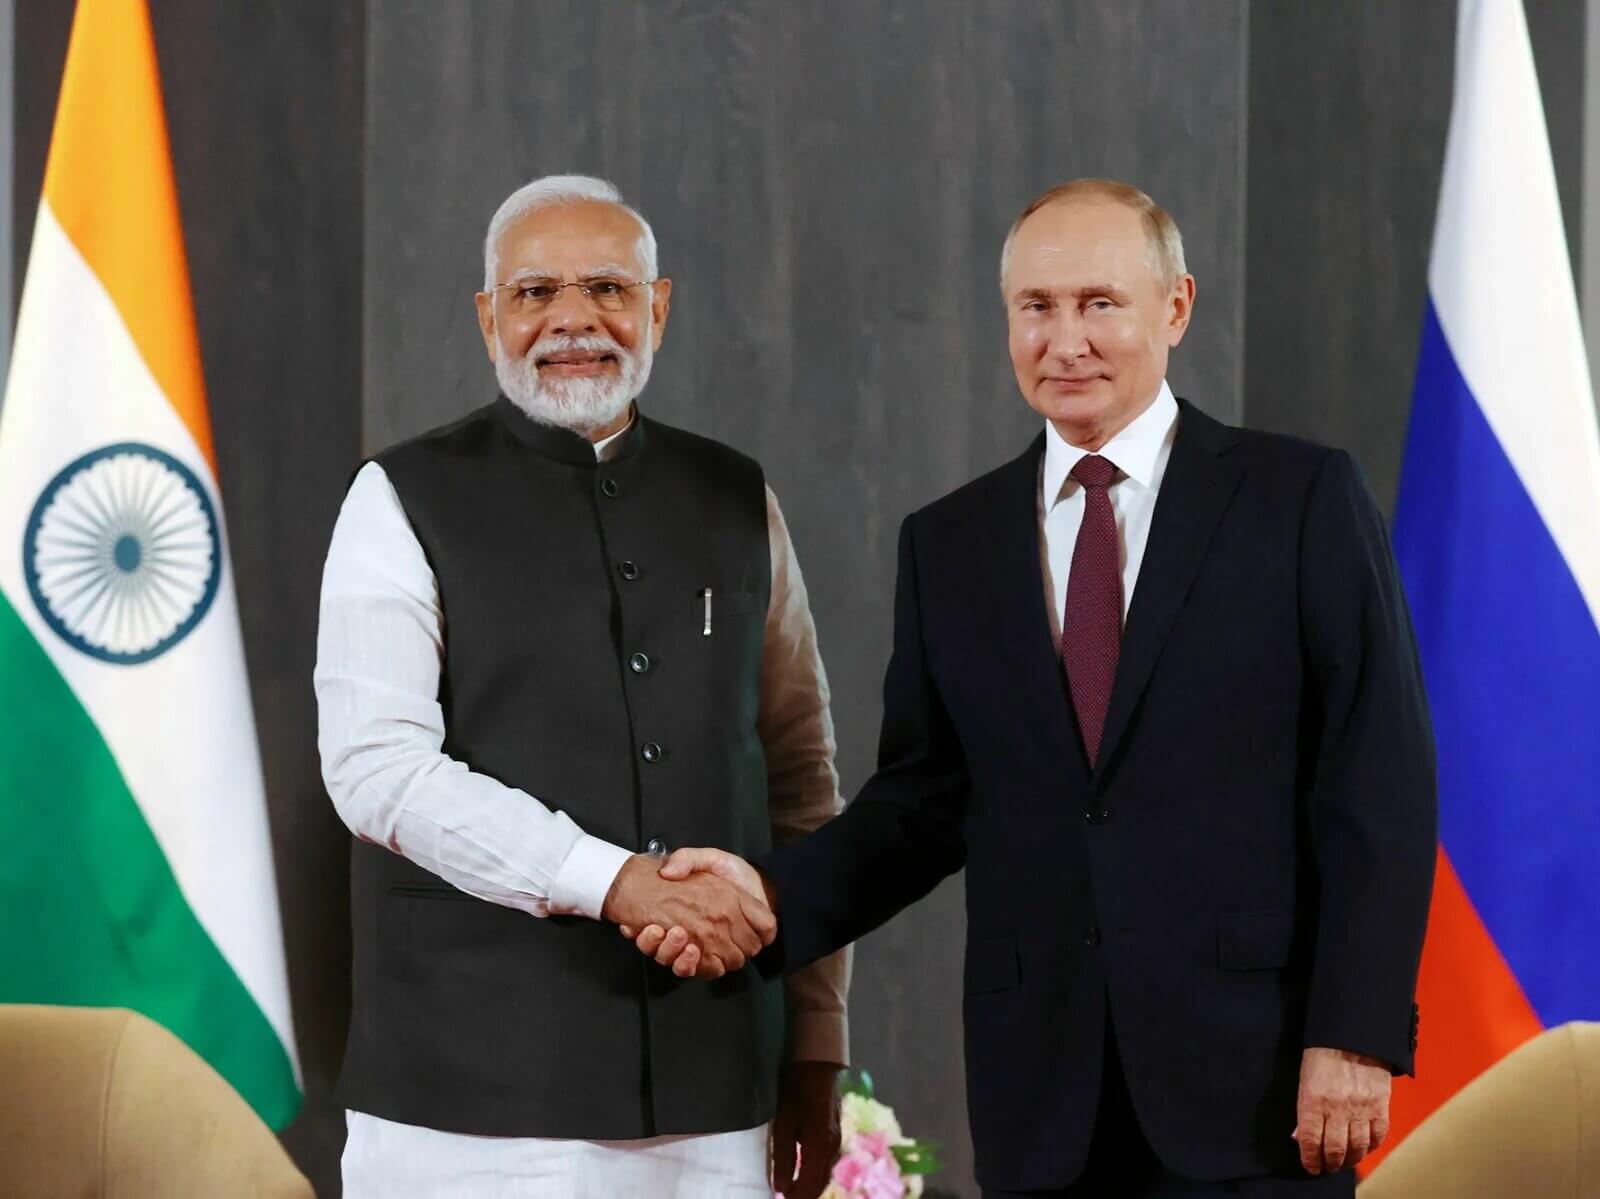 Russia Scrambles to Avoid FATF Blacklist, Puts Pressure on India to Oppose Ukraine’s Move